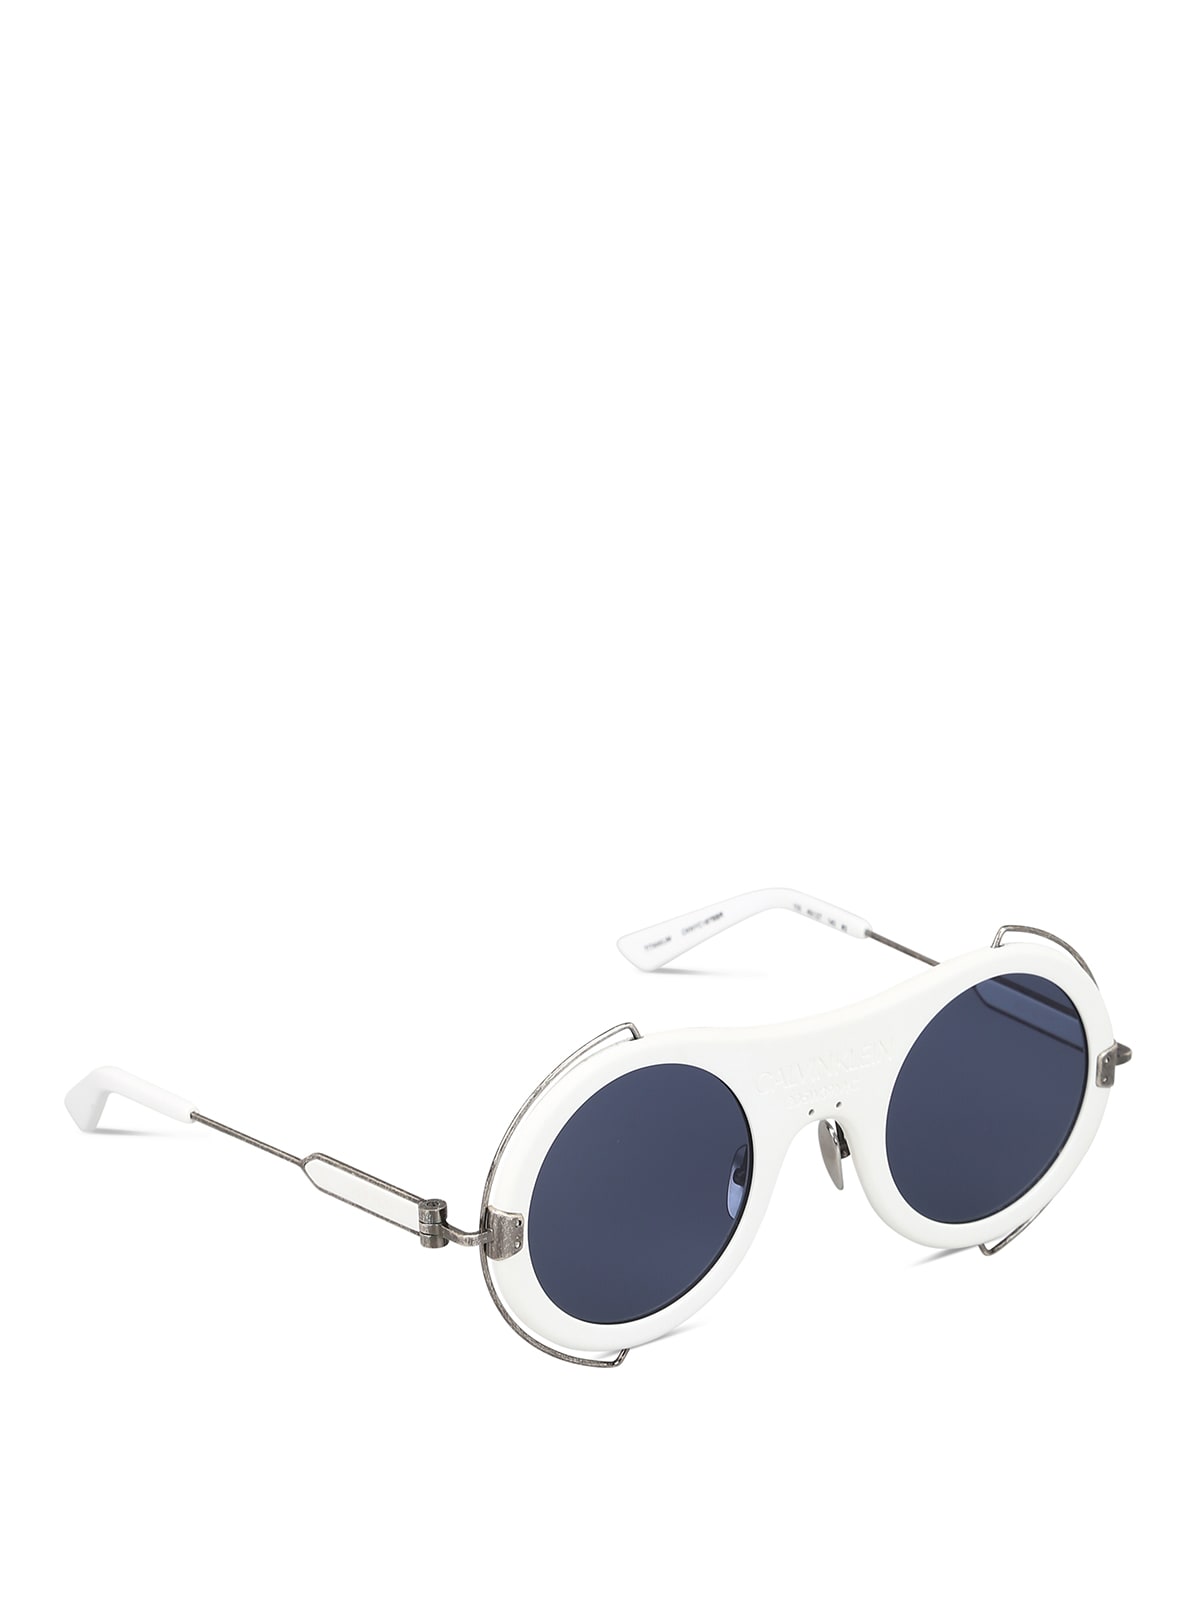 calvin klein sunglasses sale